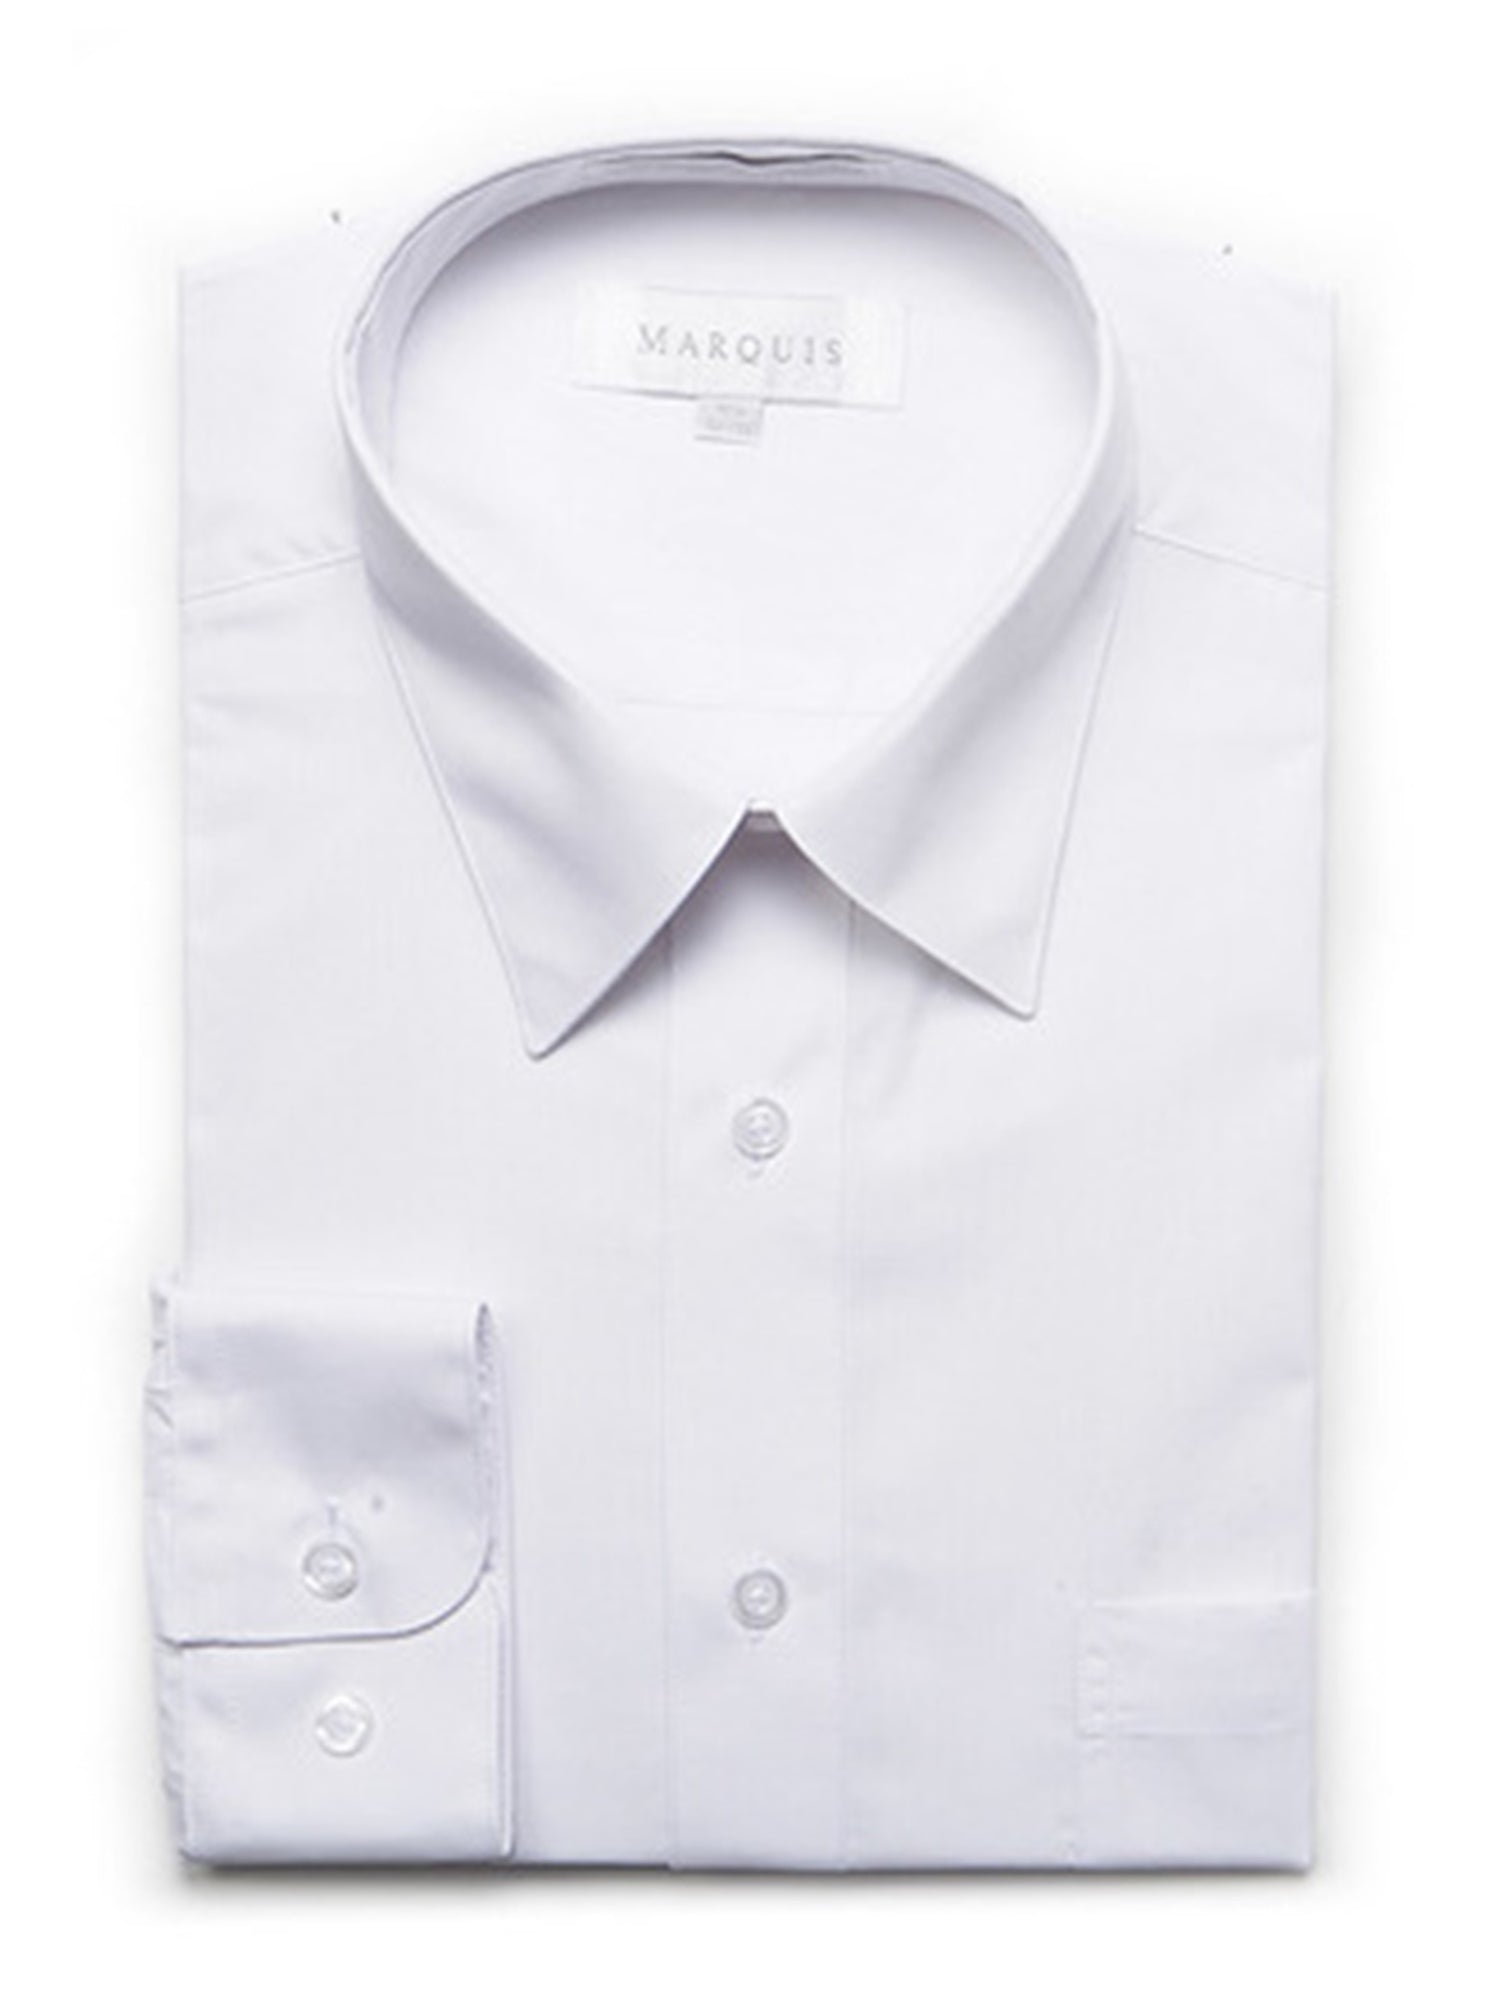 Marquis Men's Long Sleeve Regular Fit Big & Tall Size Dress Shirt Big & Tall Size Dress Shirt Marquis White 3XL 19.5 Neck 38/39 Sleeve 